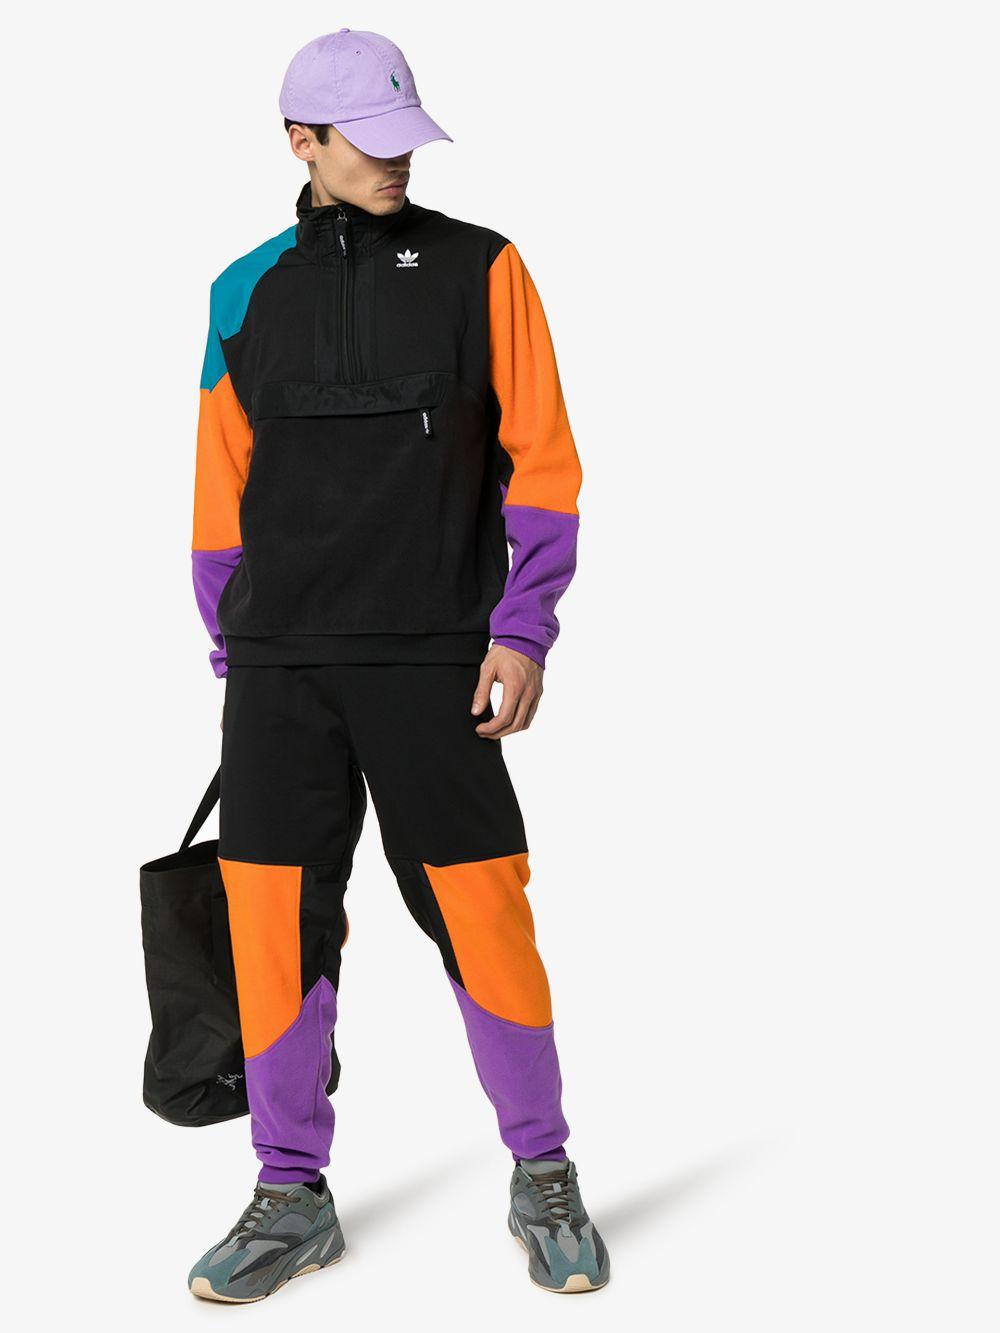 adidas Black Originals Pt3 Fleece Jacket for Men | Lyst Australia